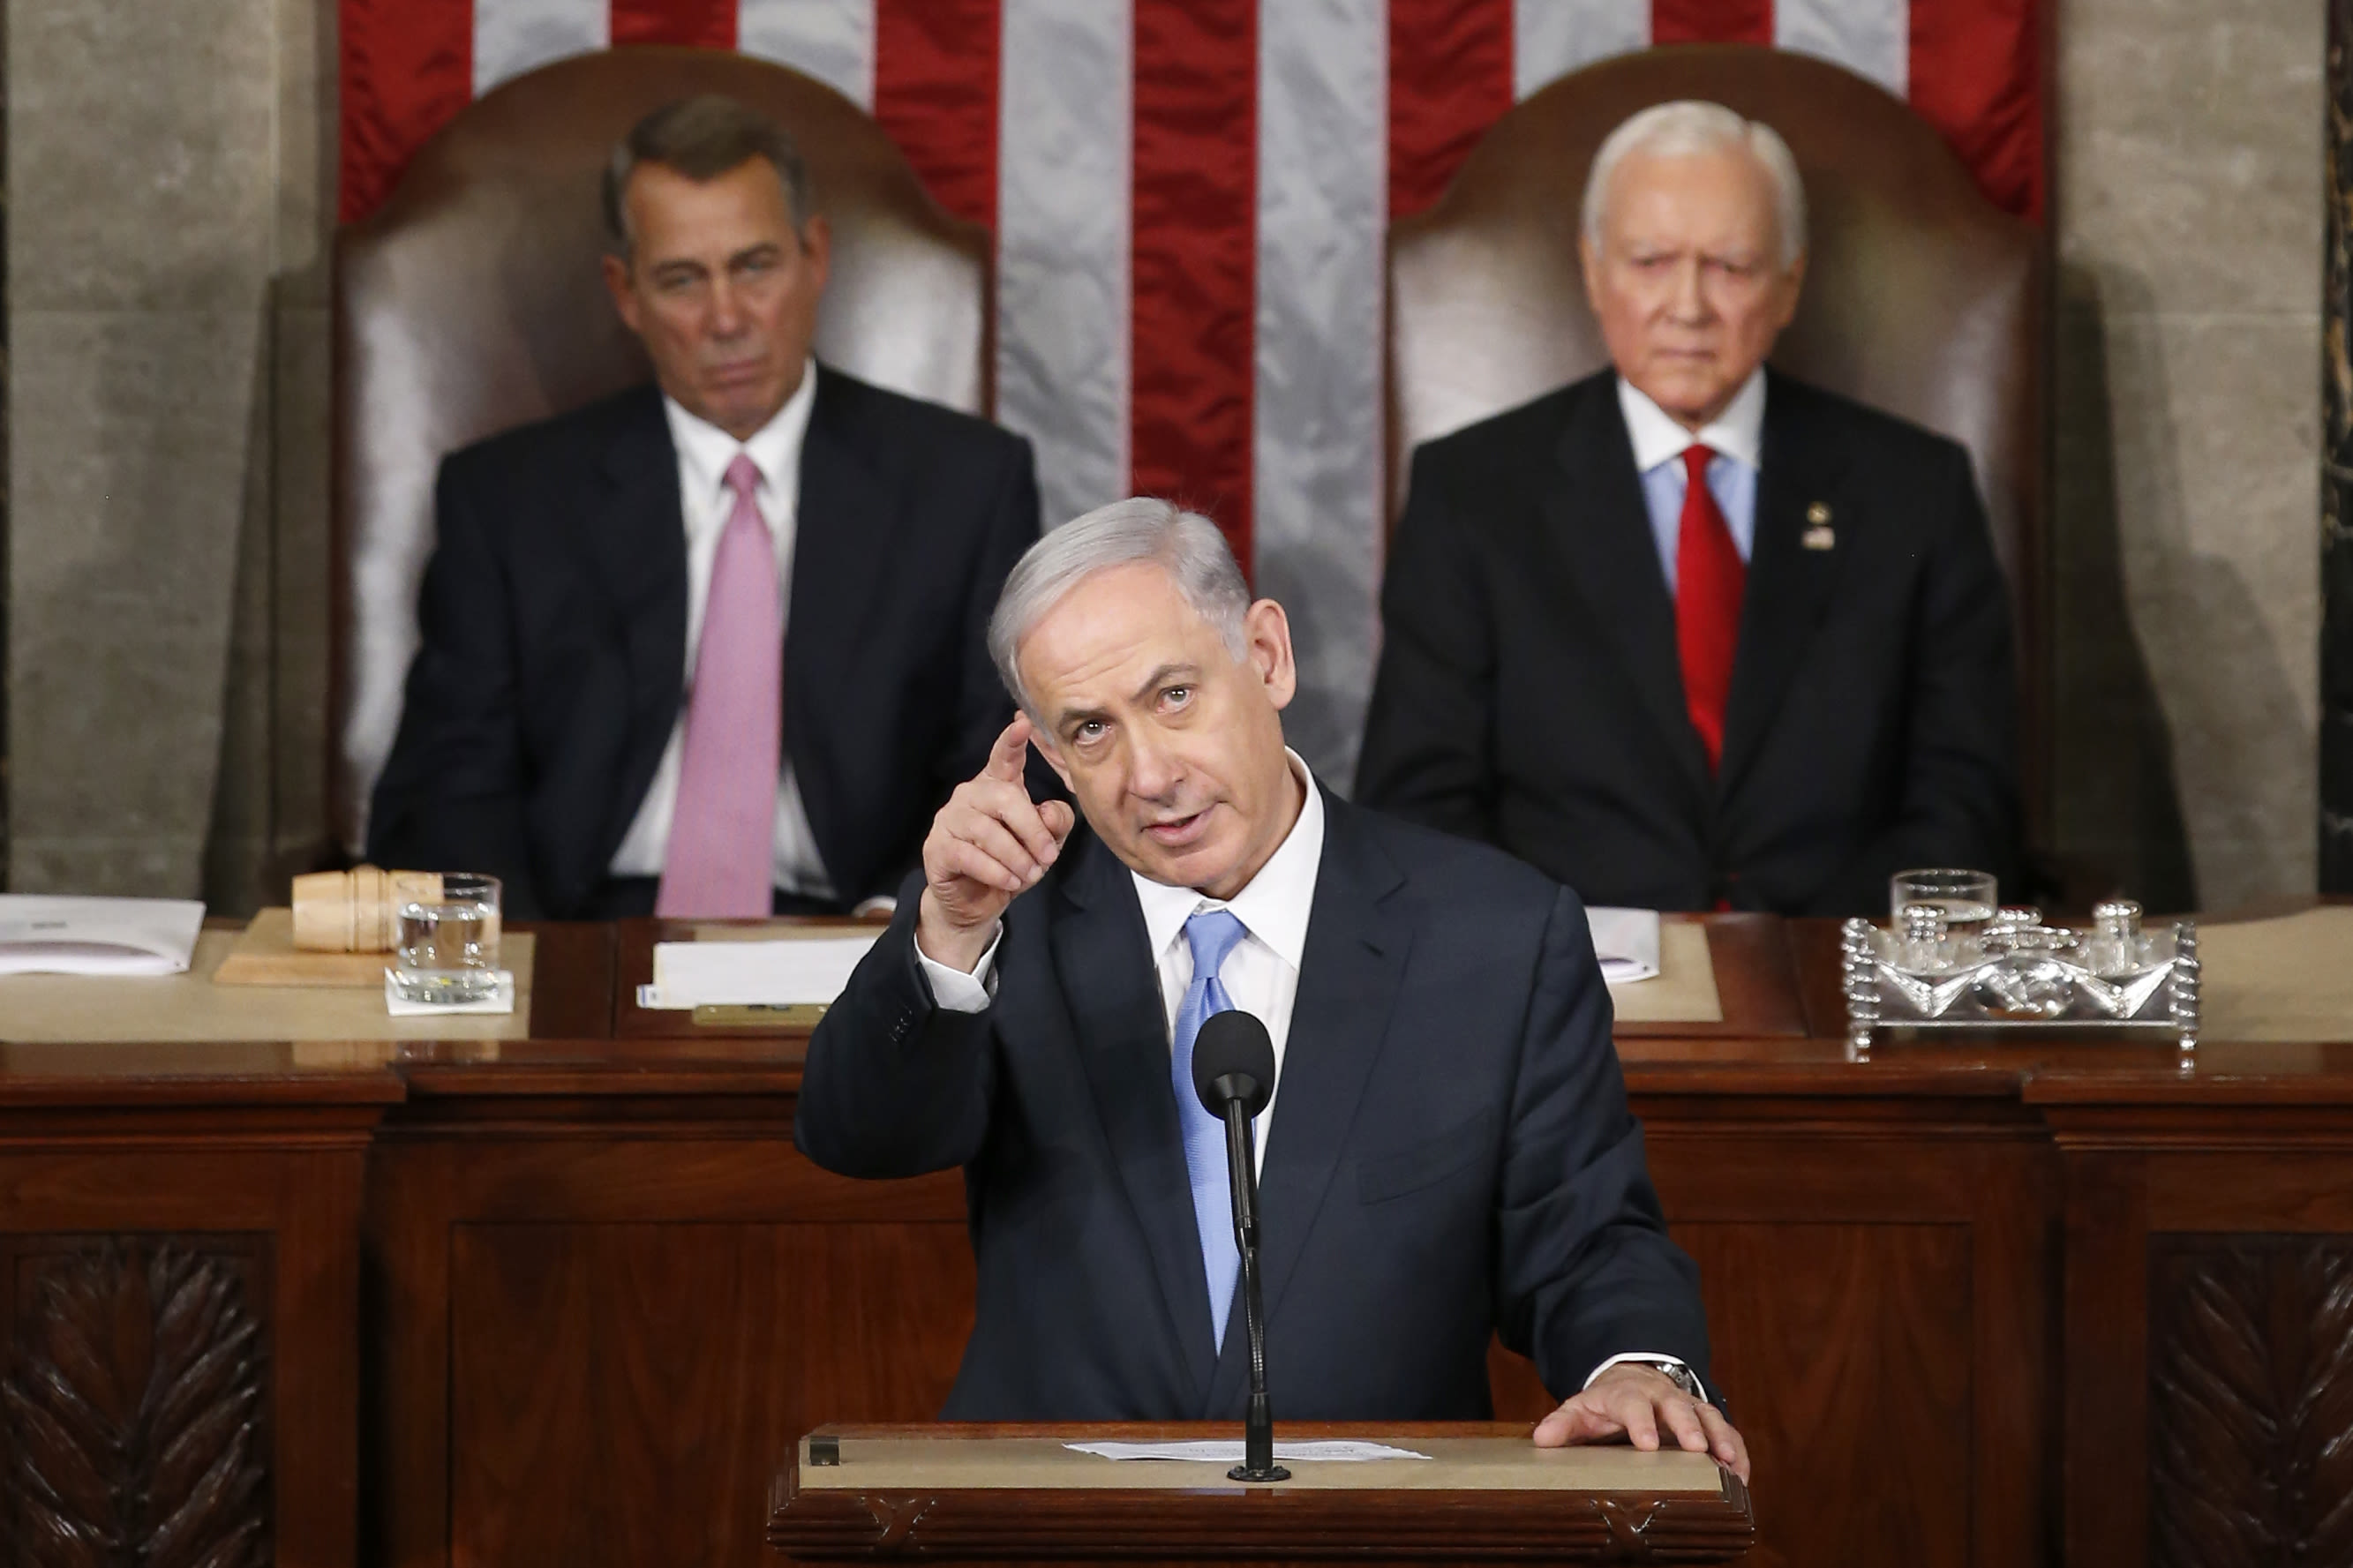 Netanyahu to address Congress, showcasing U.S. partisan divide